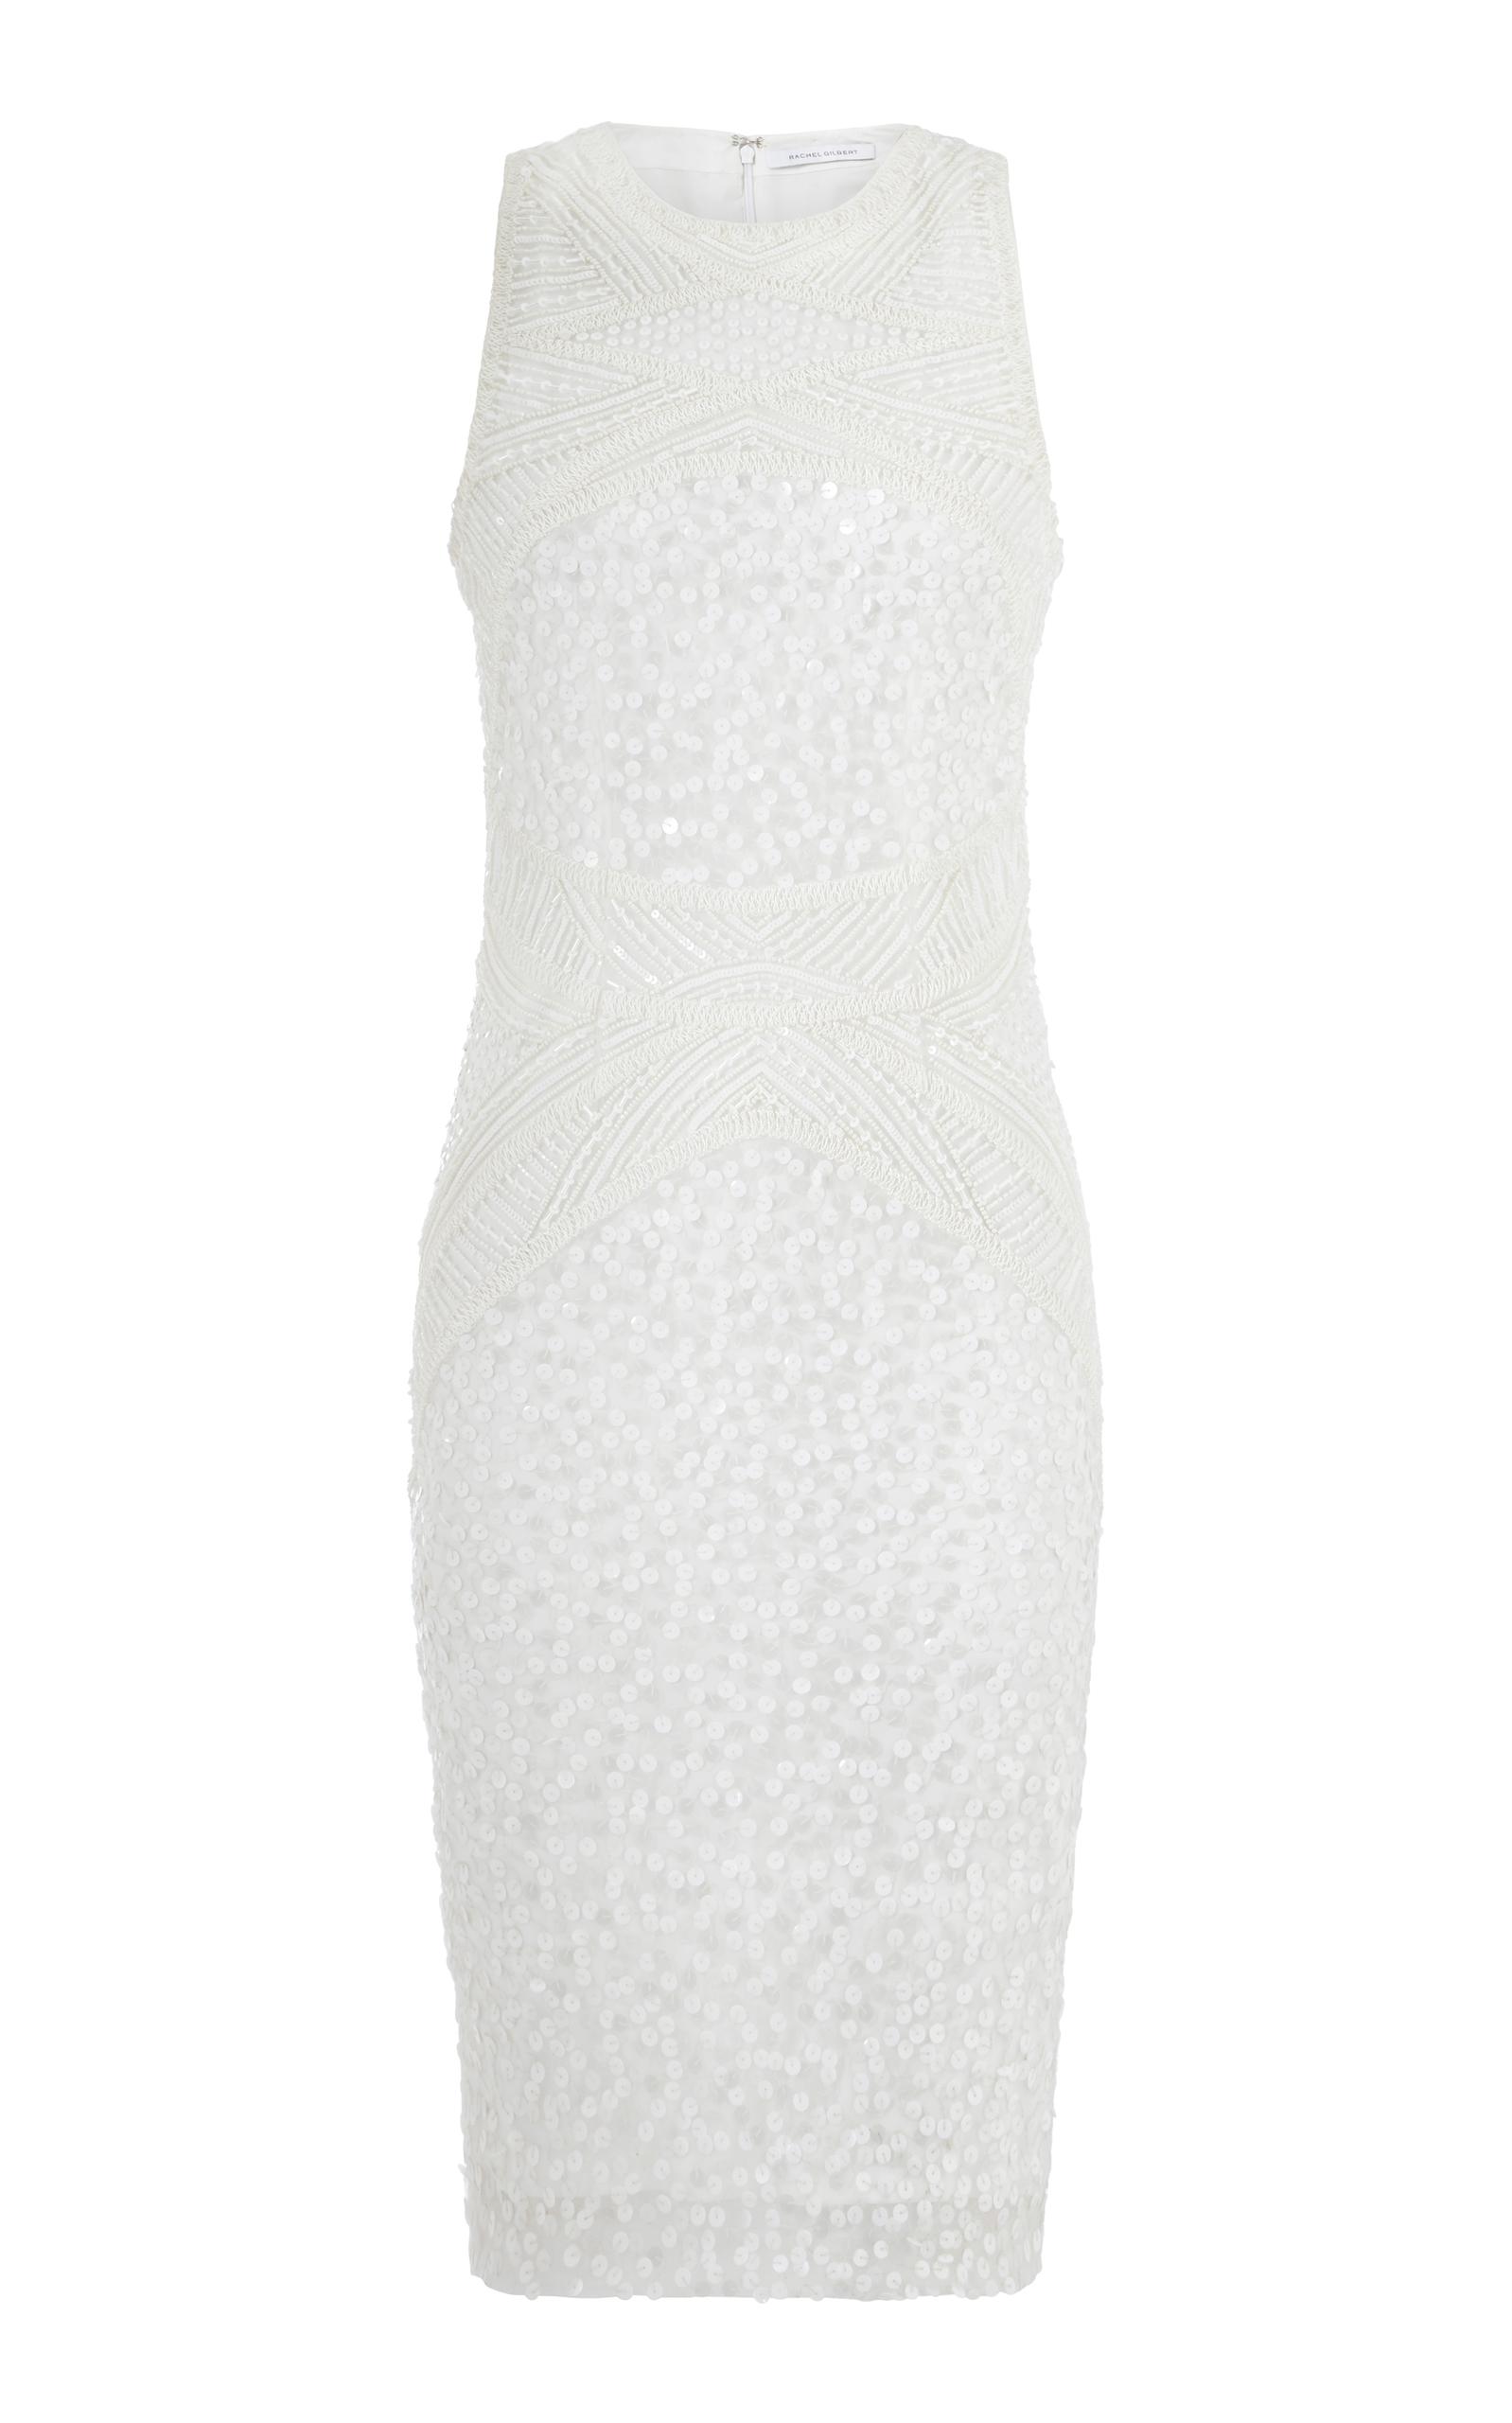 Rachel gilbert Renee Embellished Mini Dress in White | Lyst